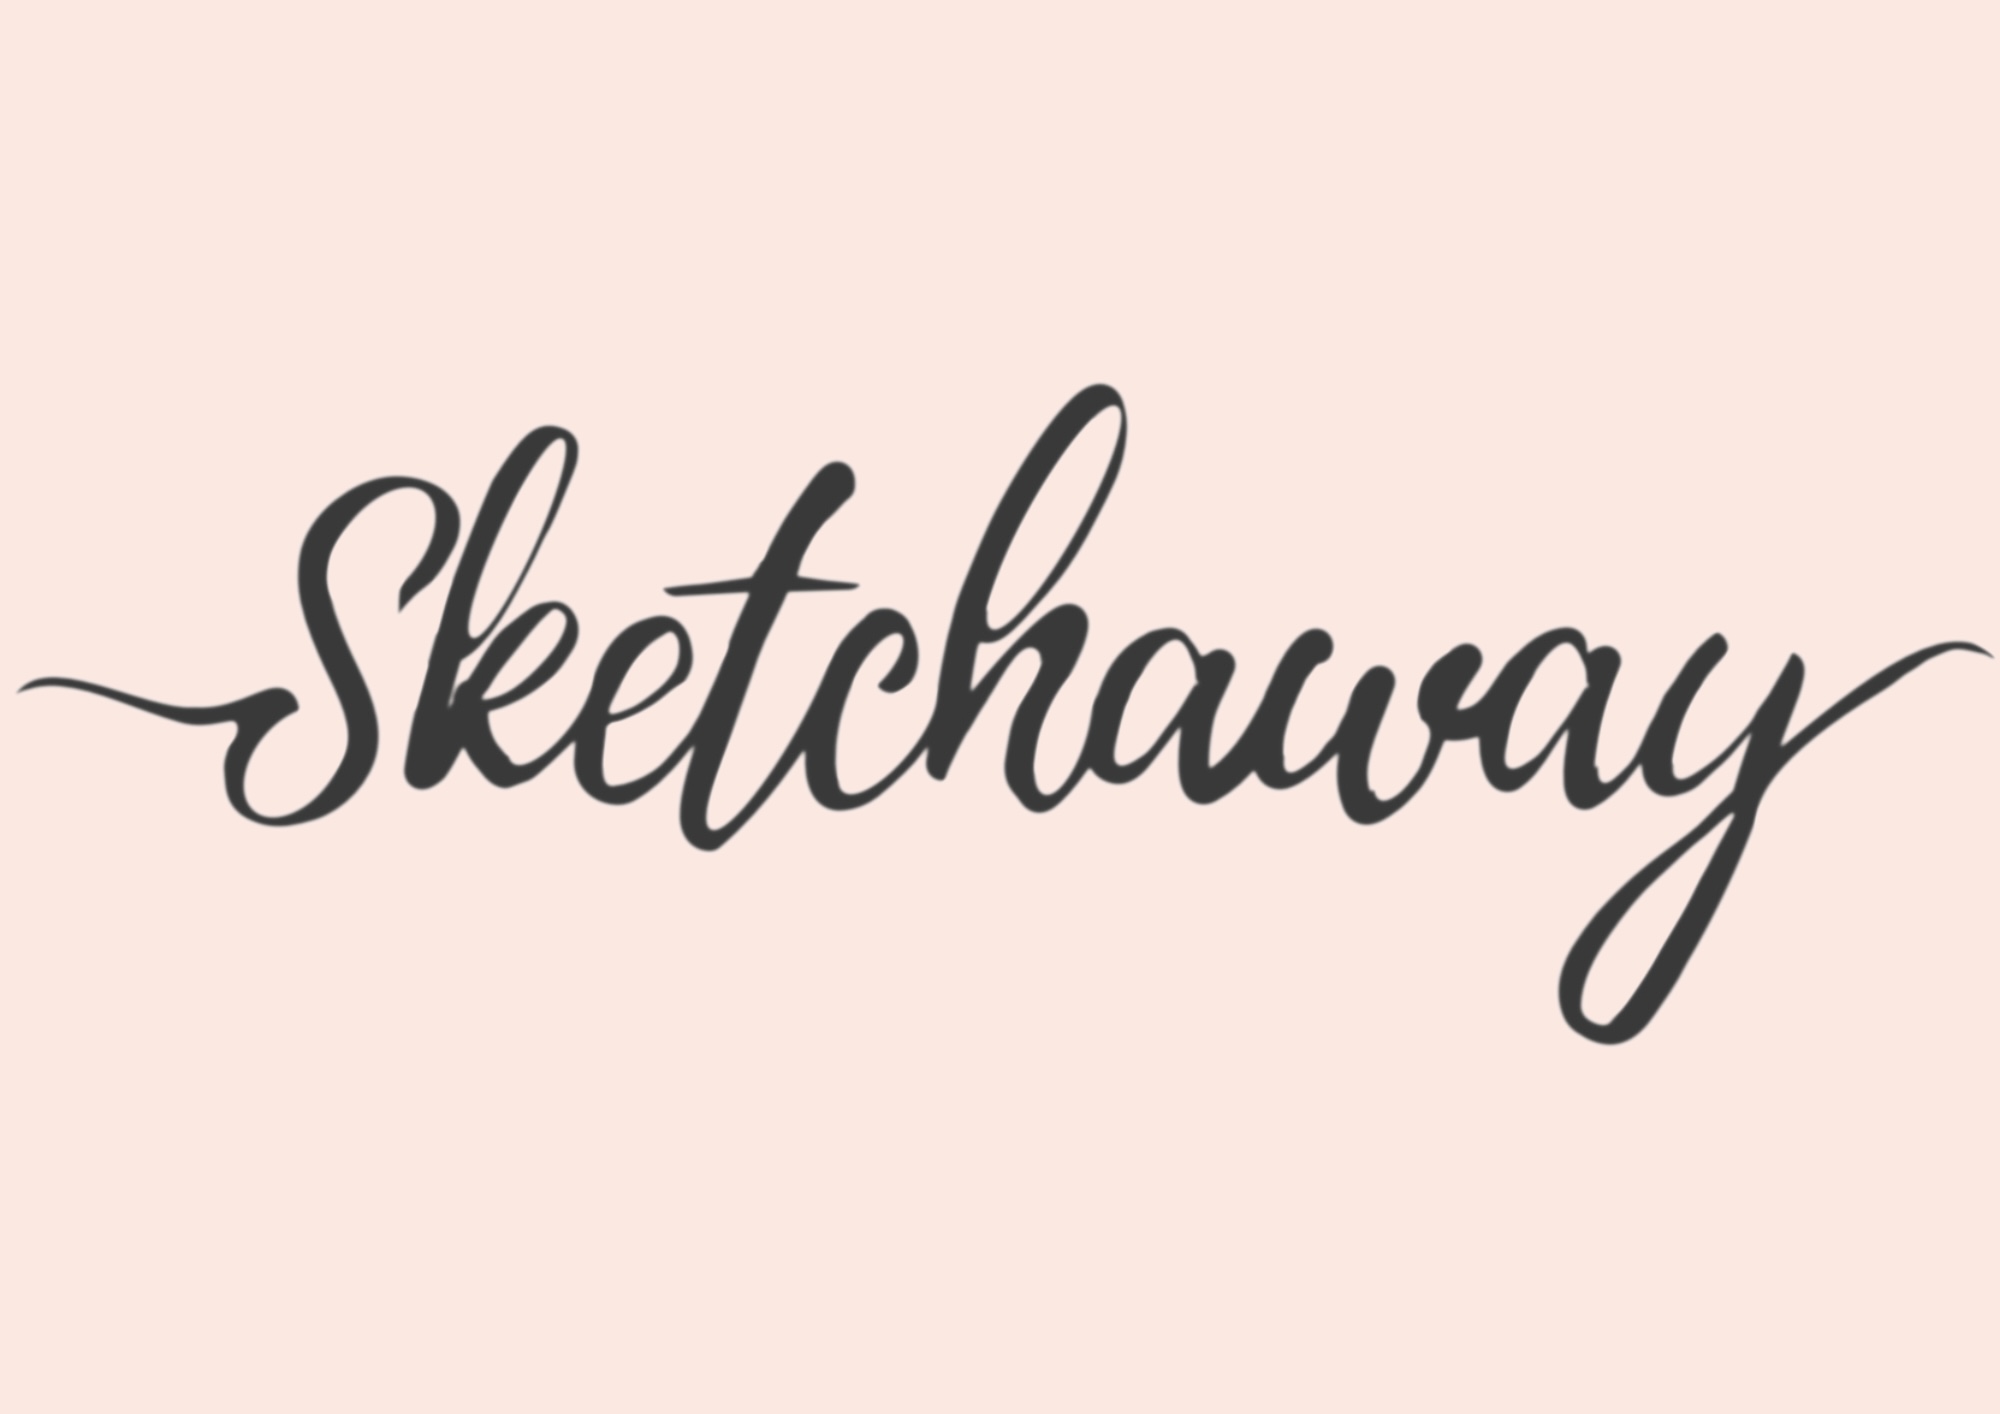 Sketchaway